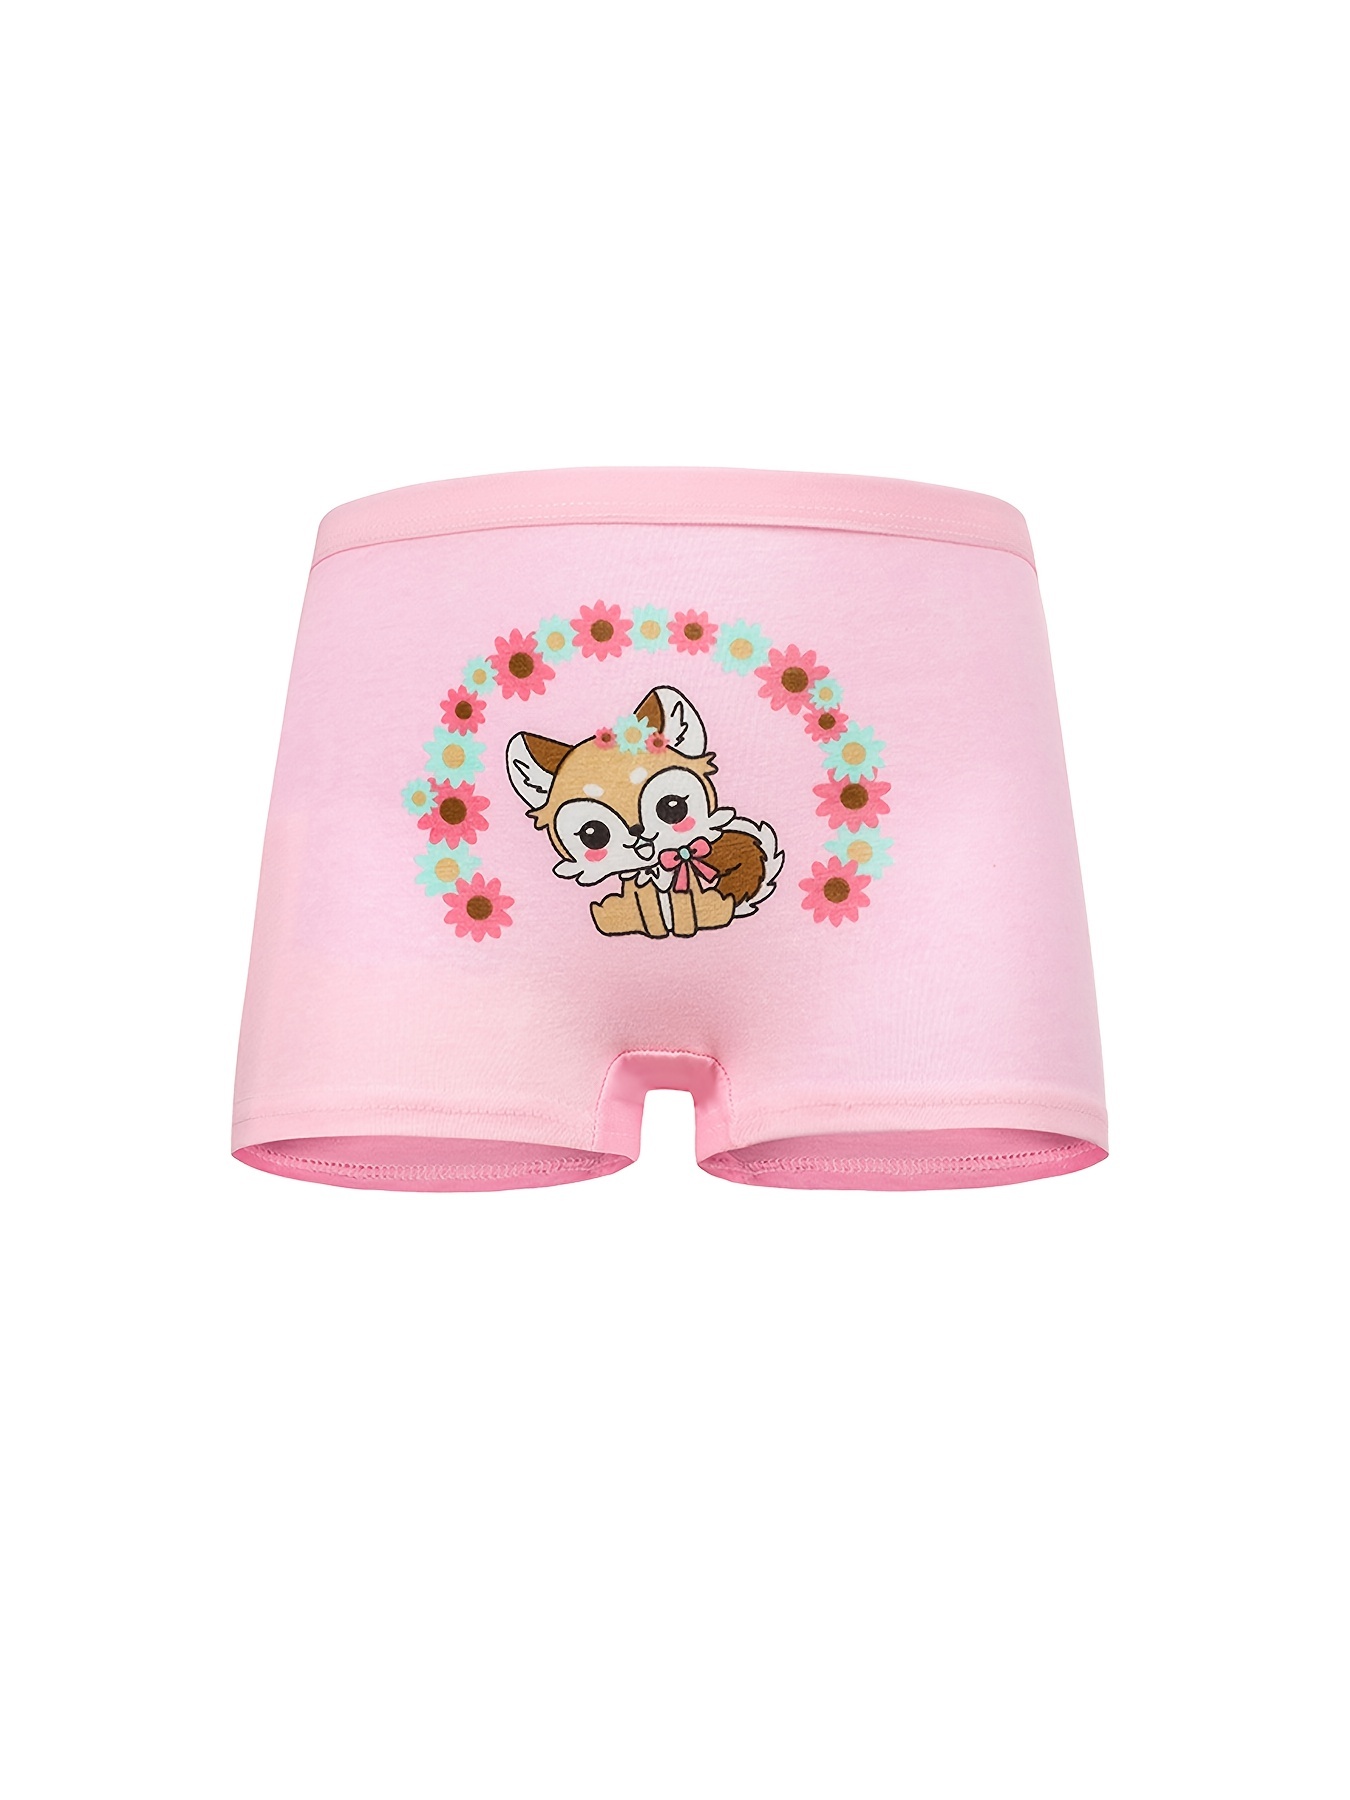 Toddler Girls Underwear Unicorn Mermaid Panties Soft Cotton Briefs 3-4t  Multicolored